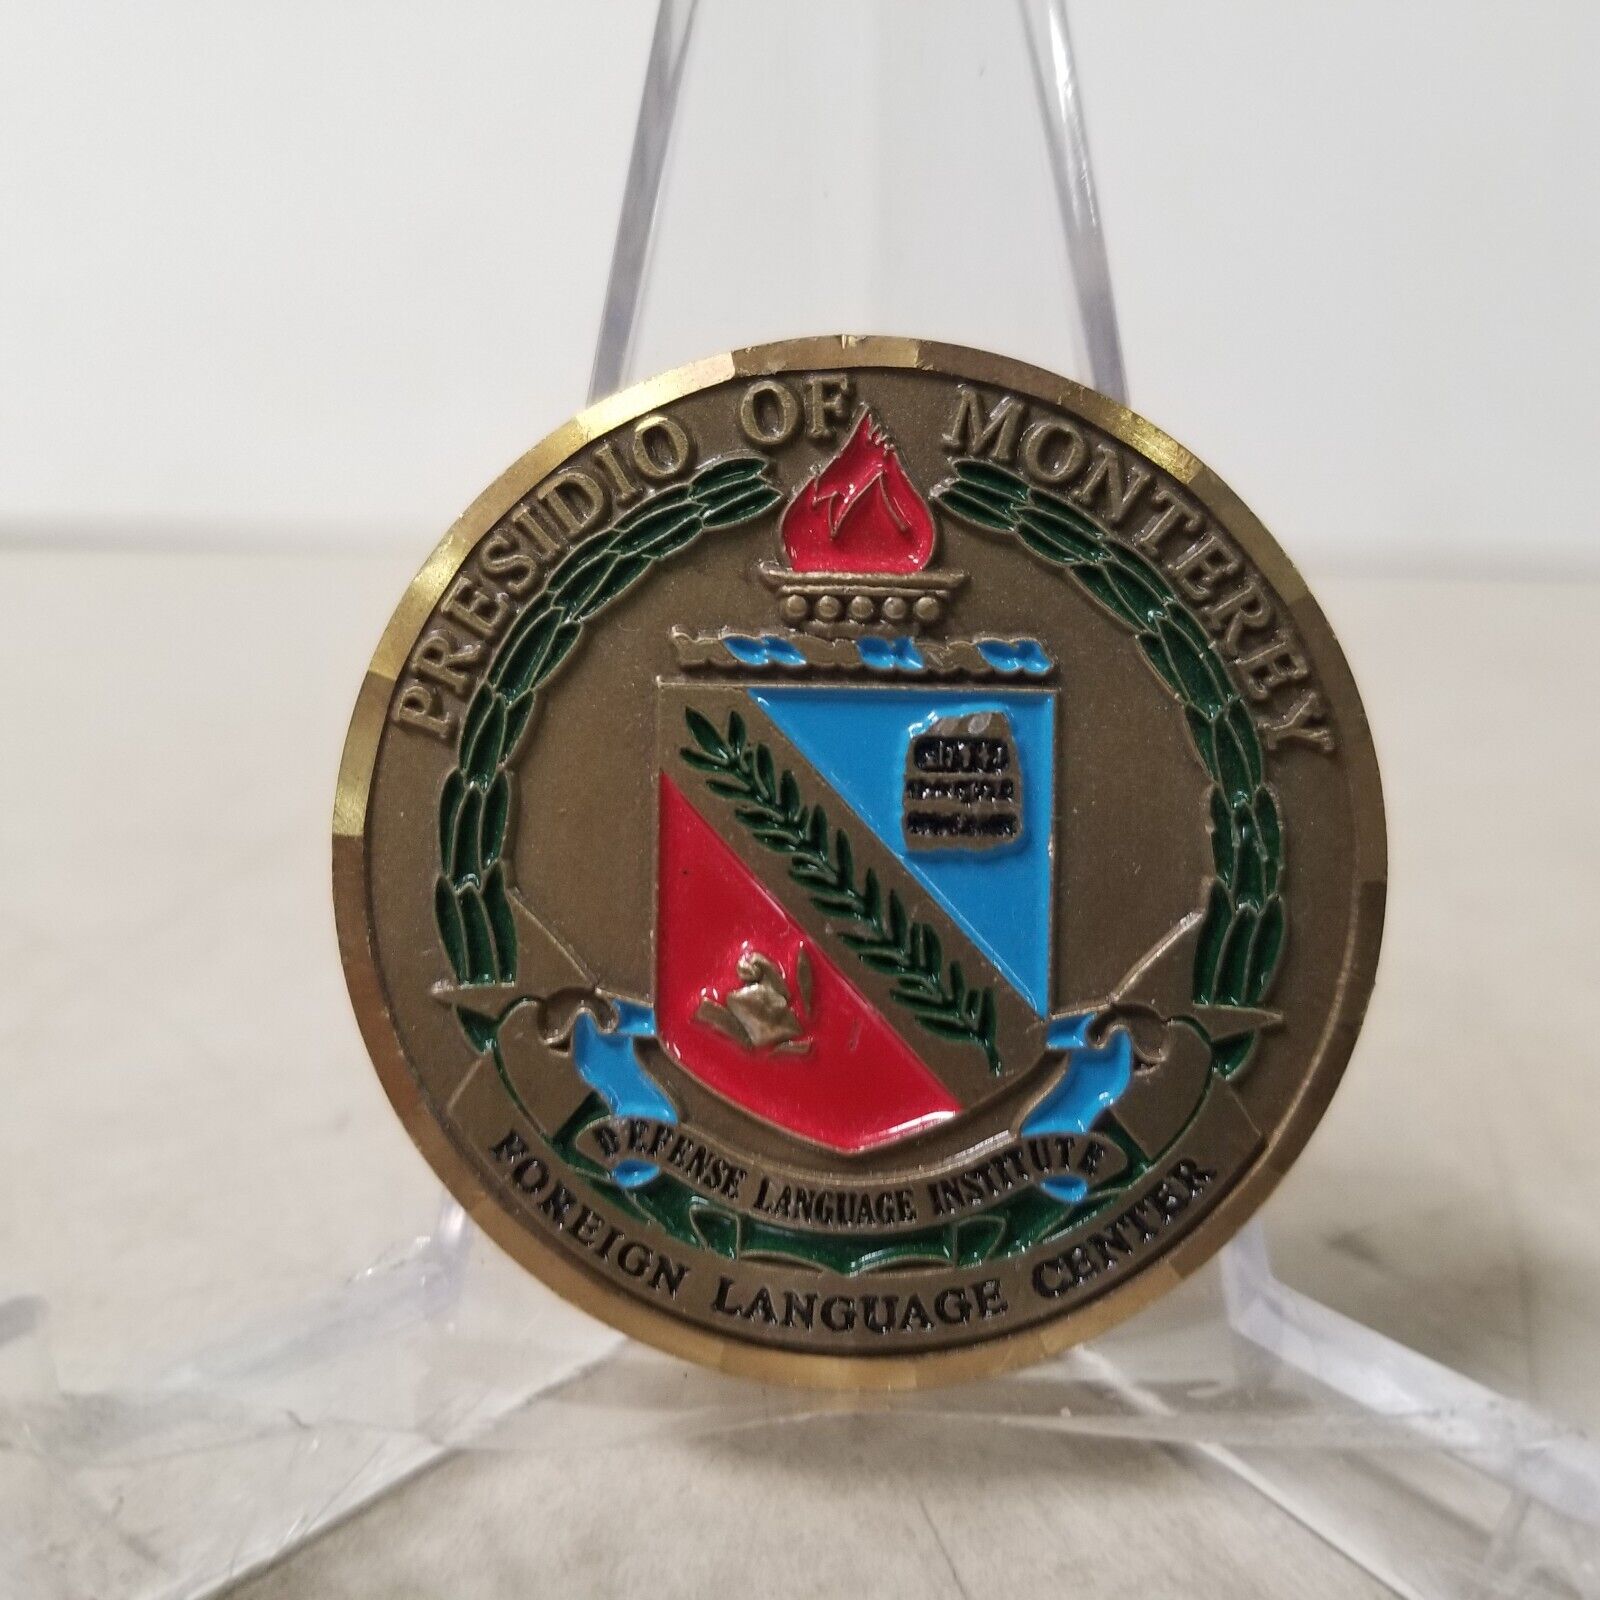 Presidio of Monterey -Foreign Language Center -Defense Institute- Challenge Coin